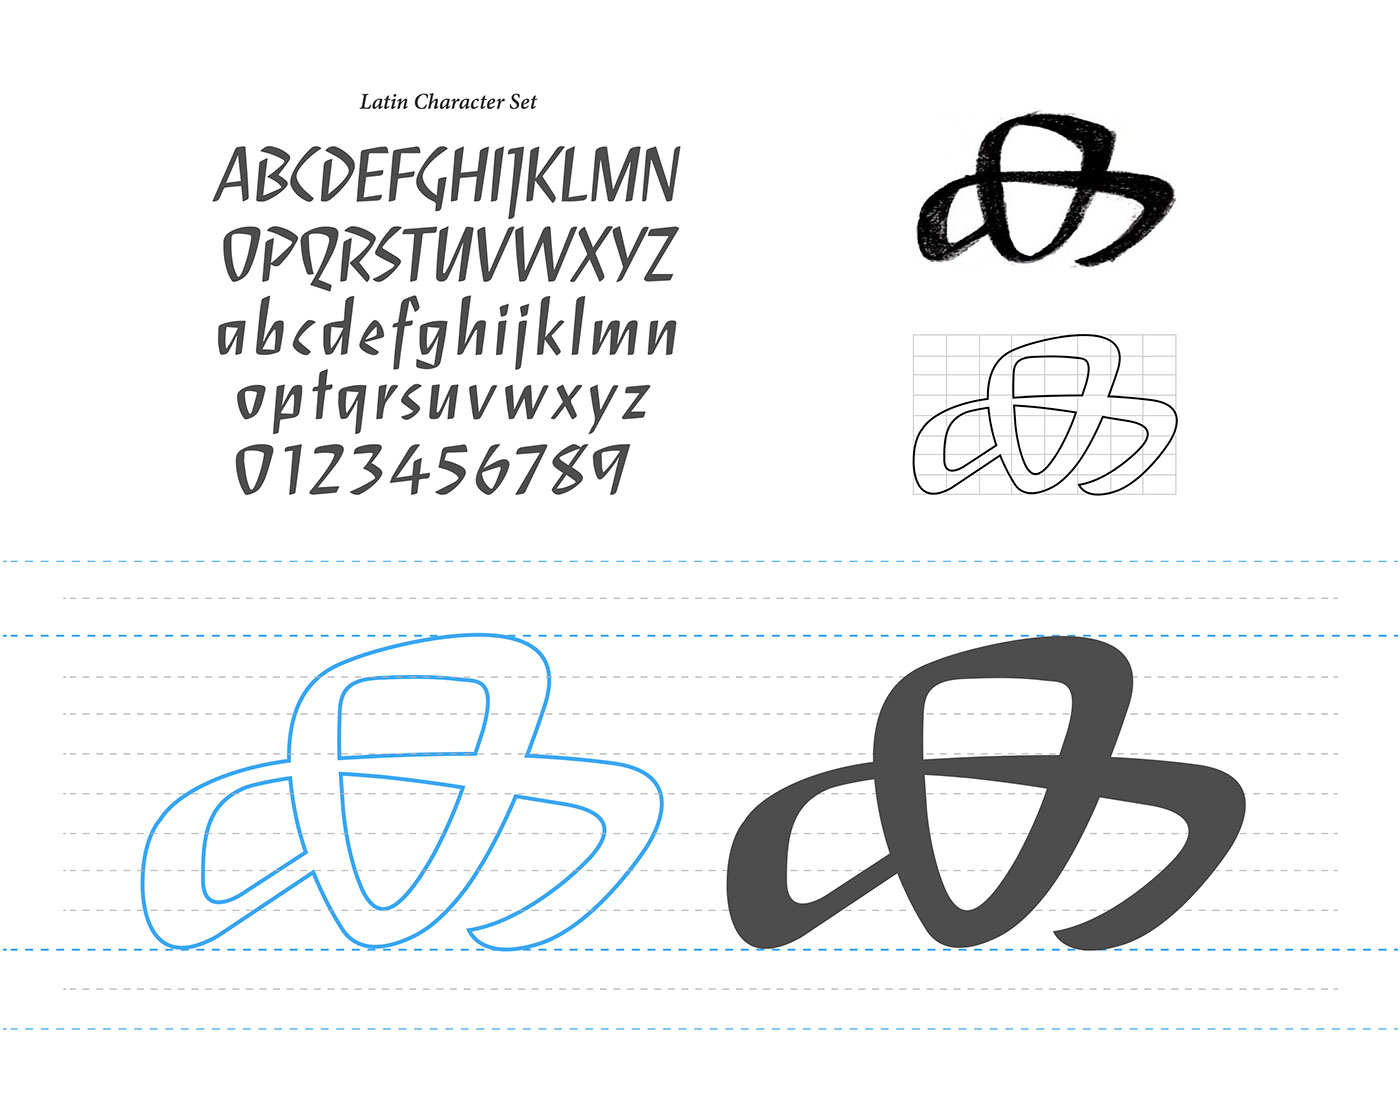 malayalam serge Typeface Indic Script alternative geometric type font Display kerala angular vector glyphs India